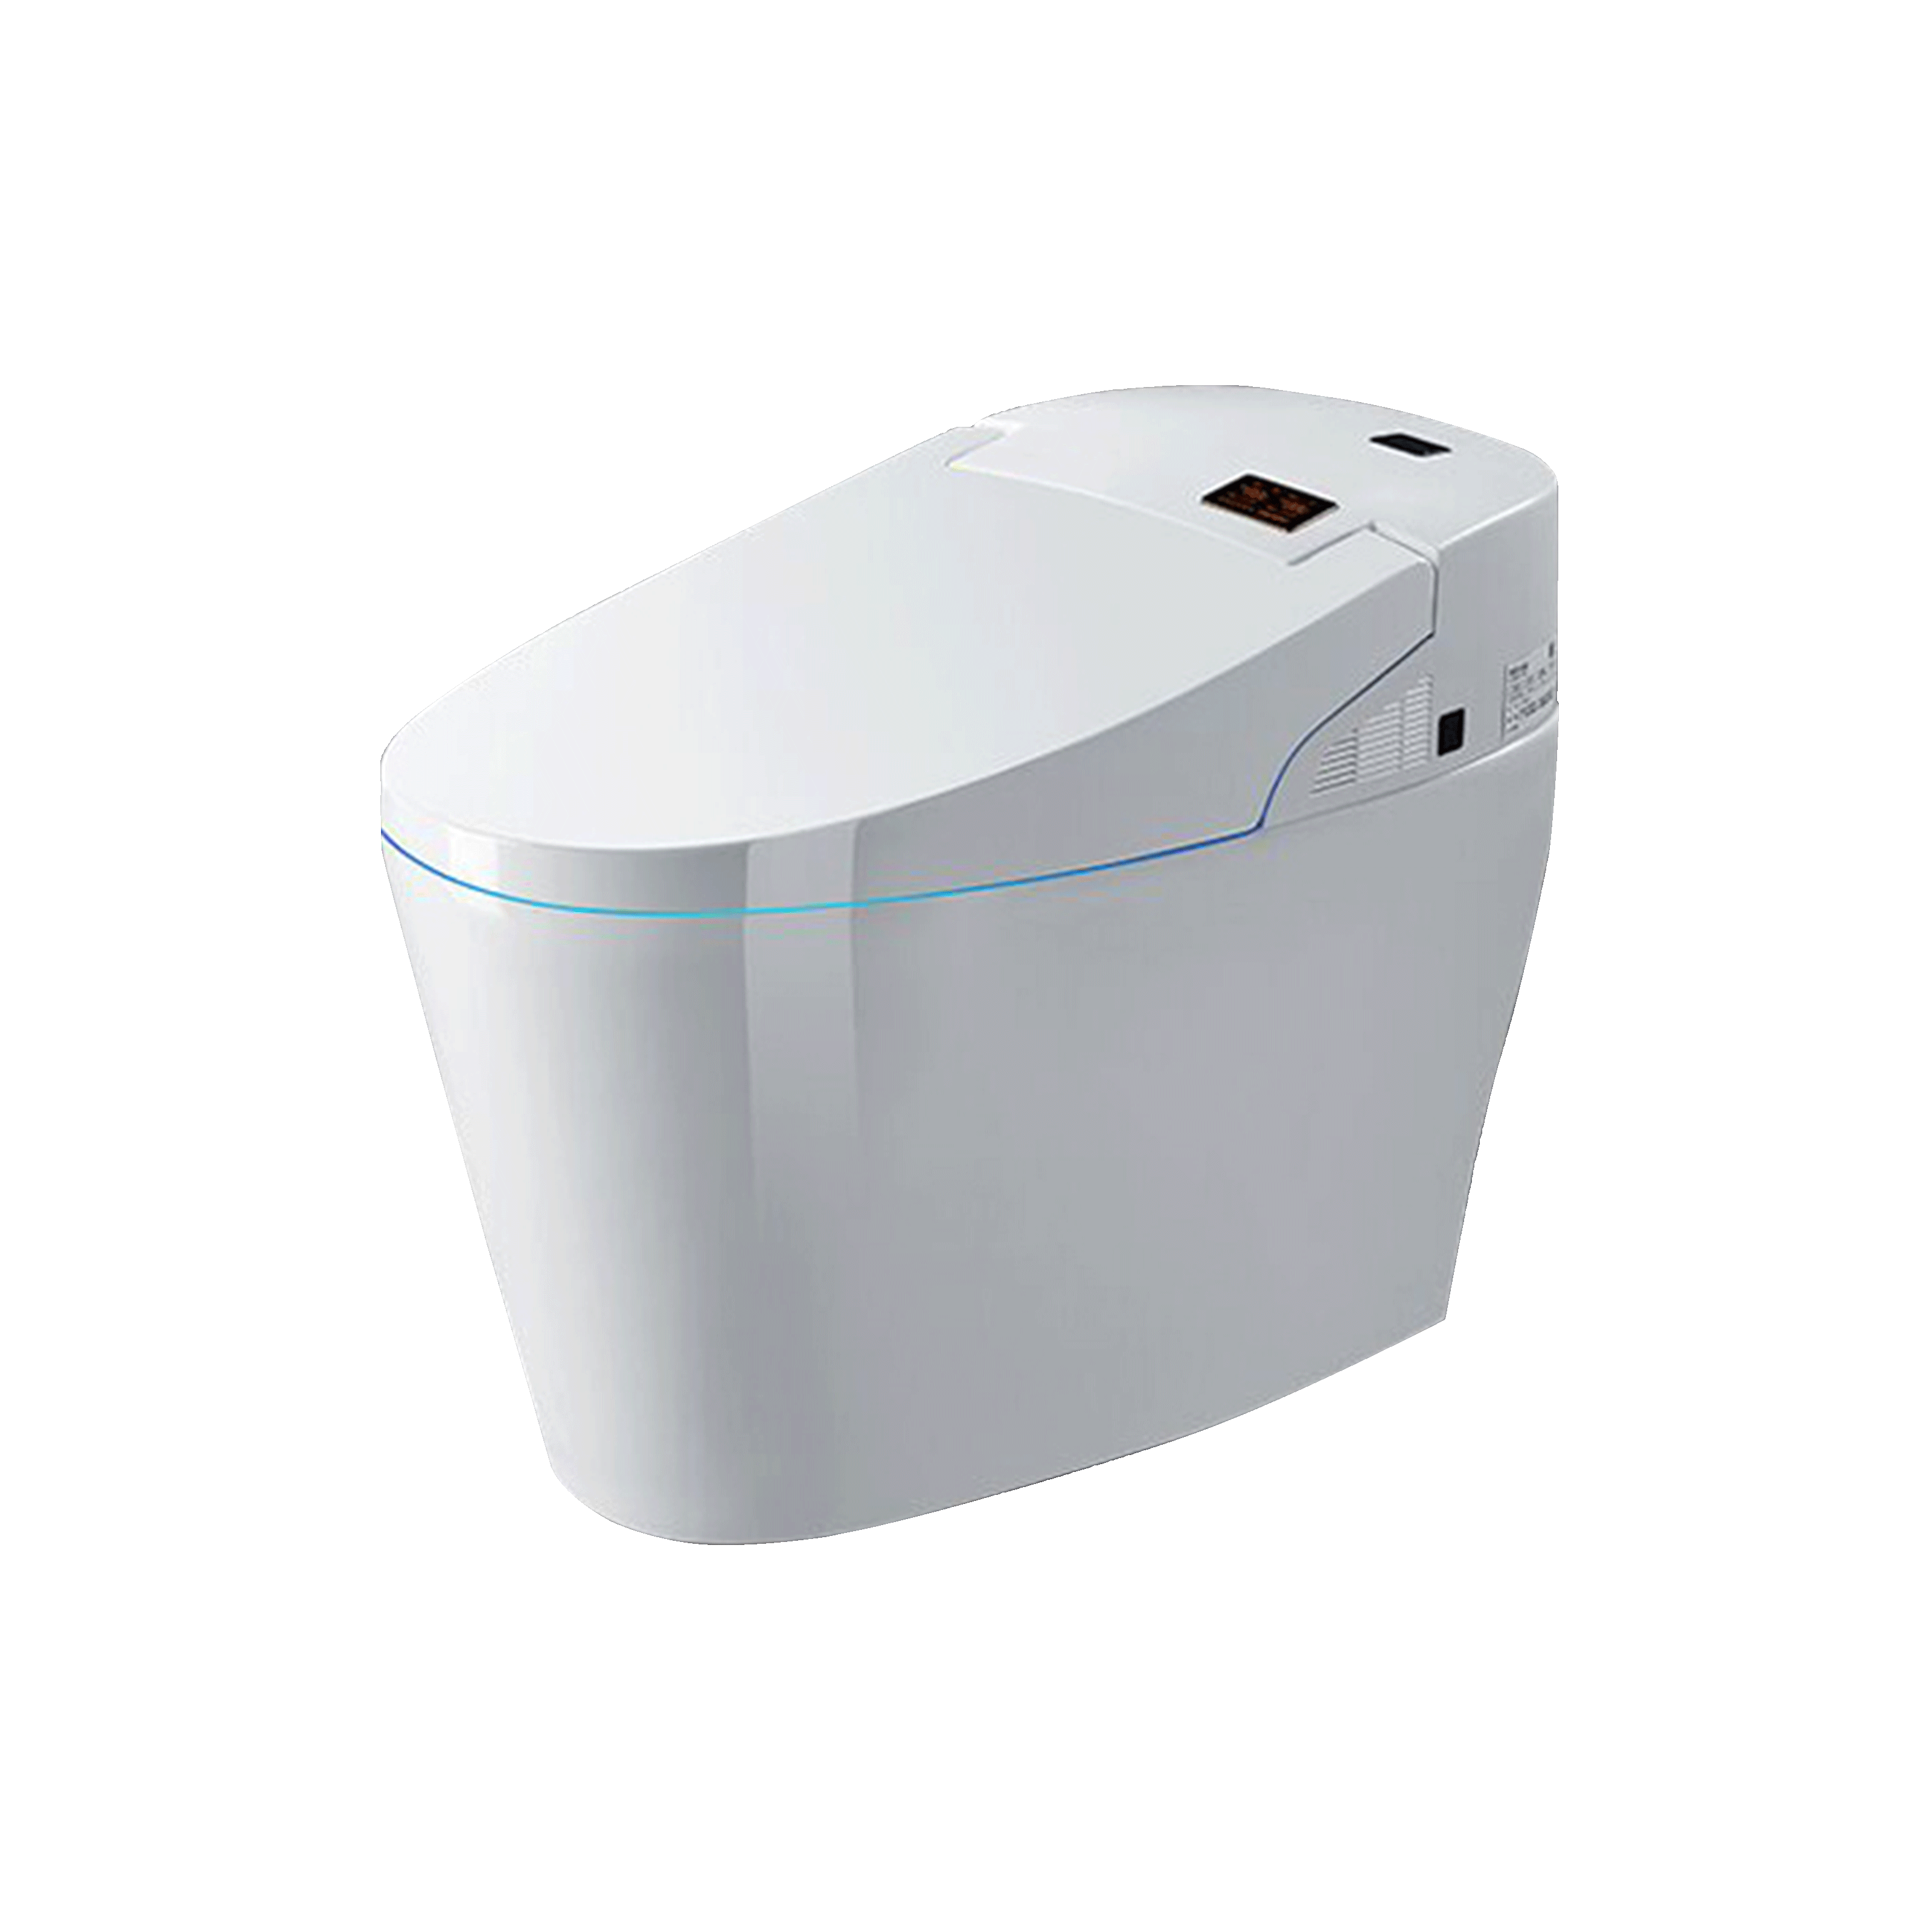 M1 Smart Toilet